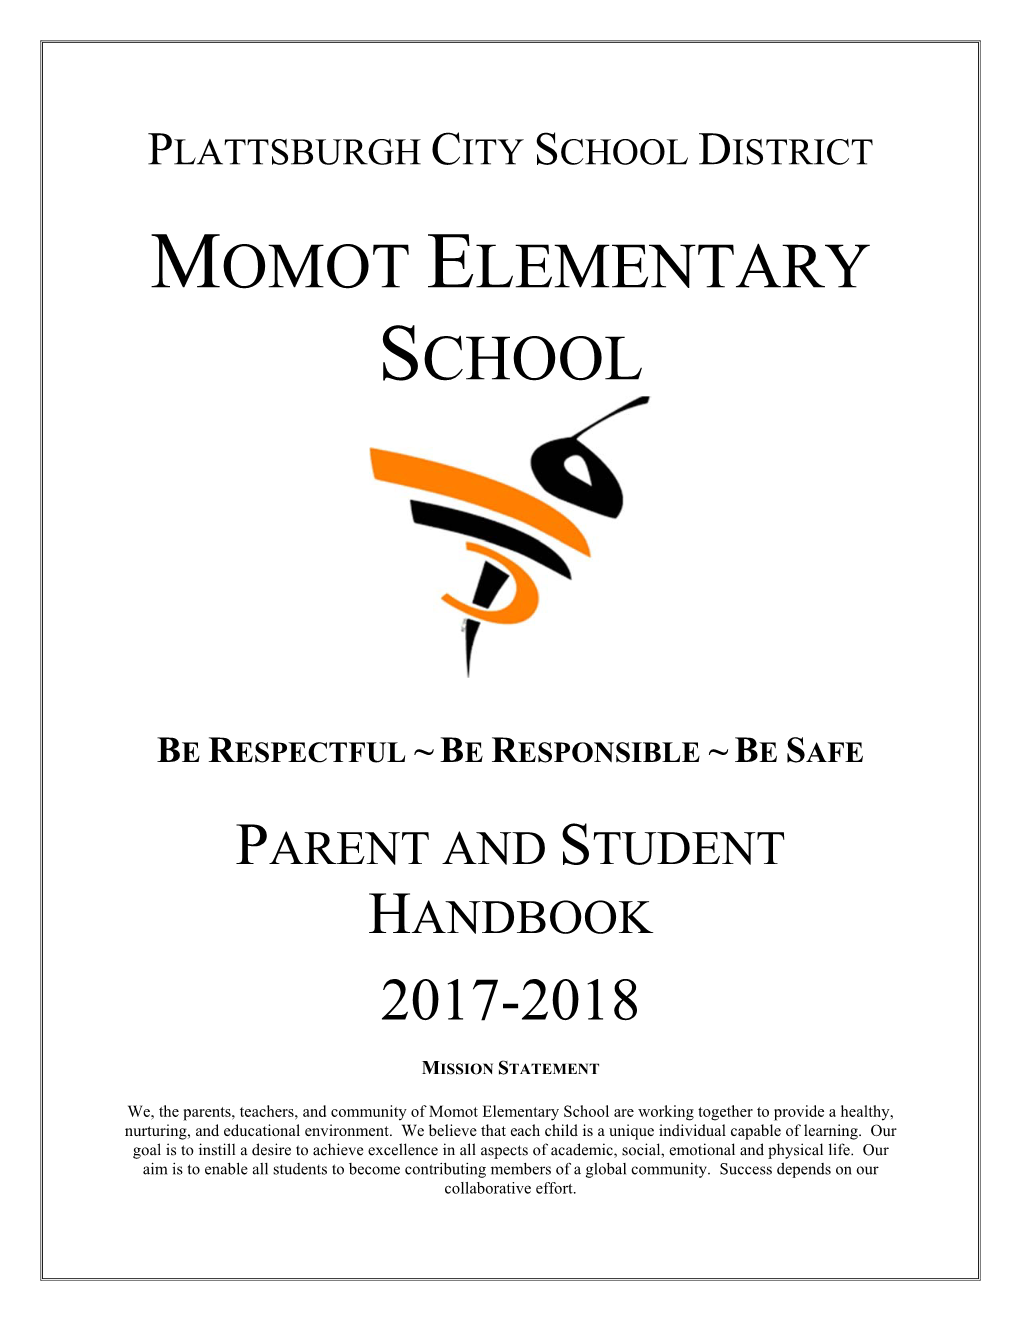 Momot Elementary School